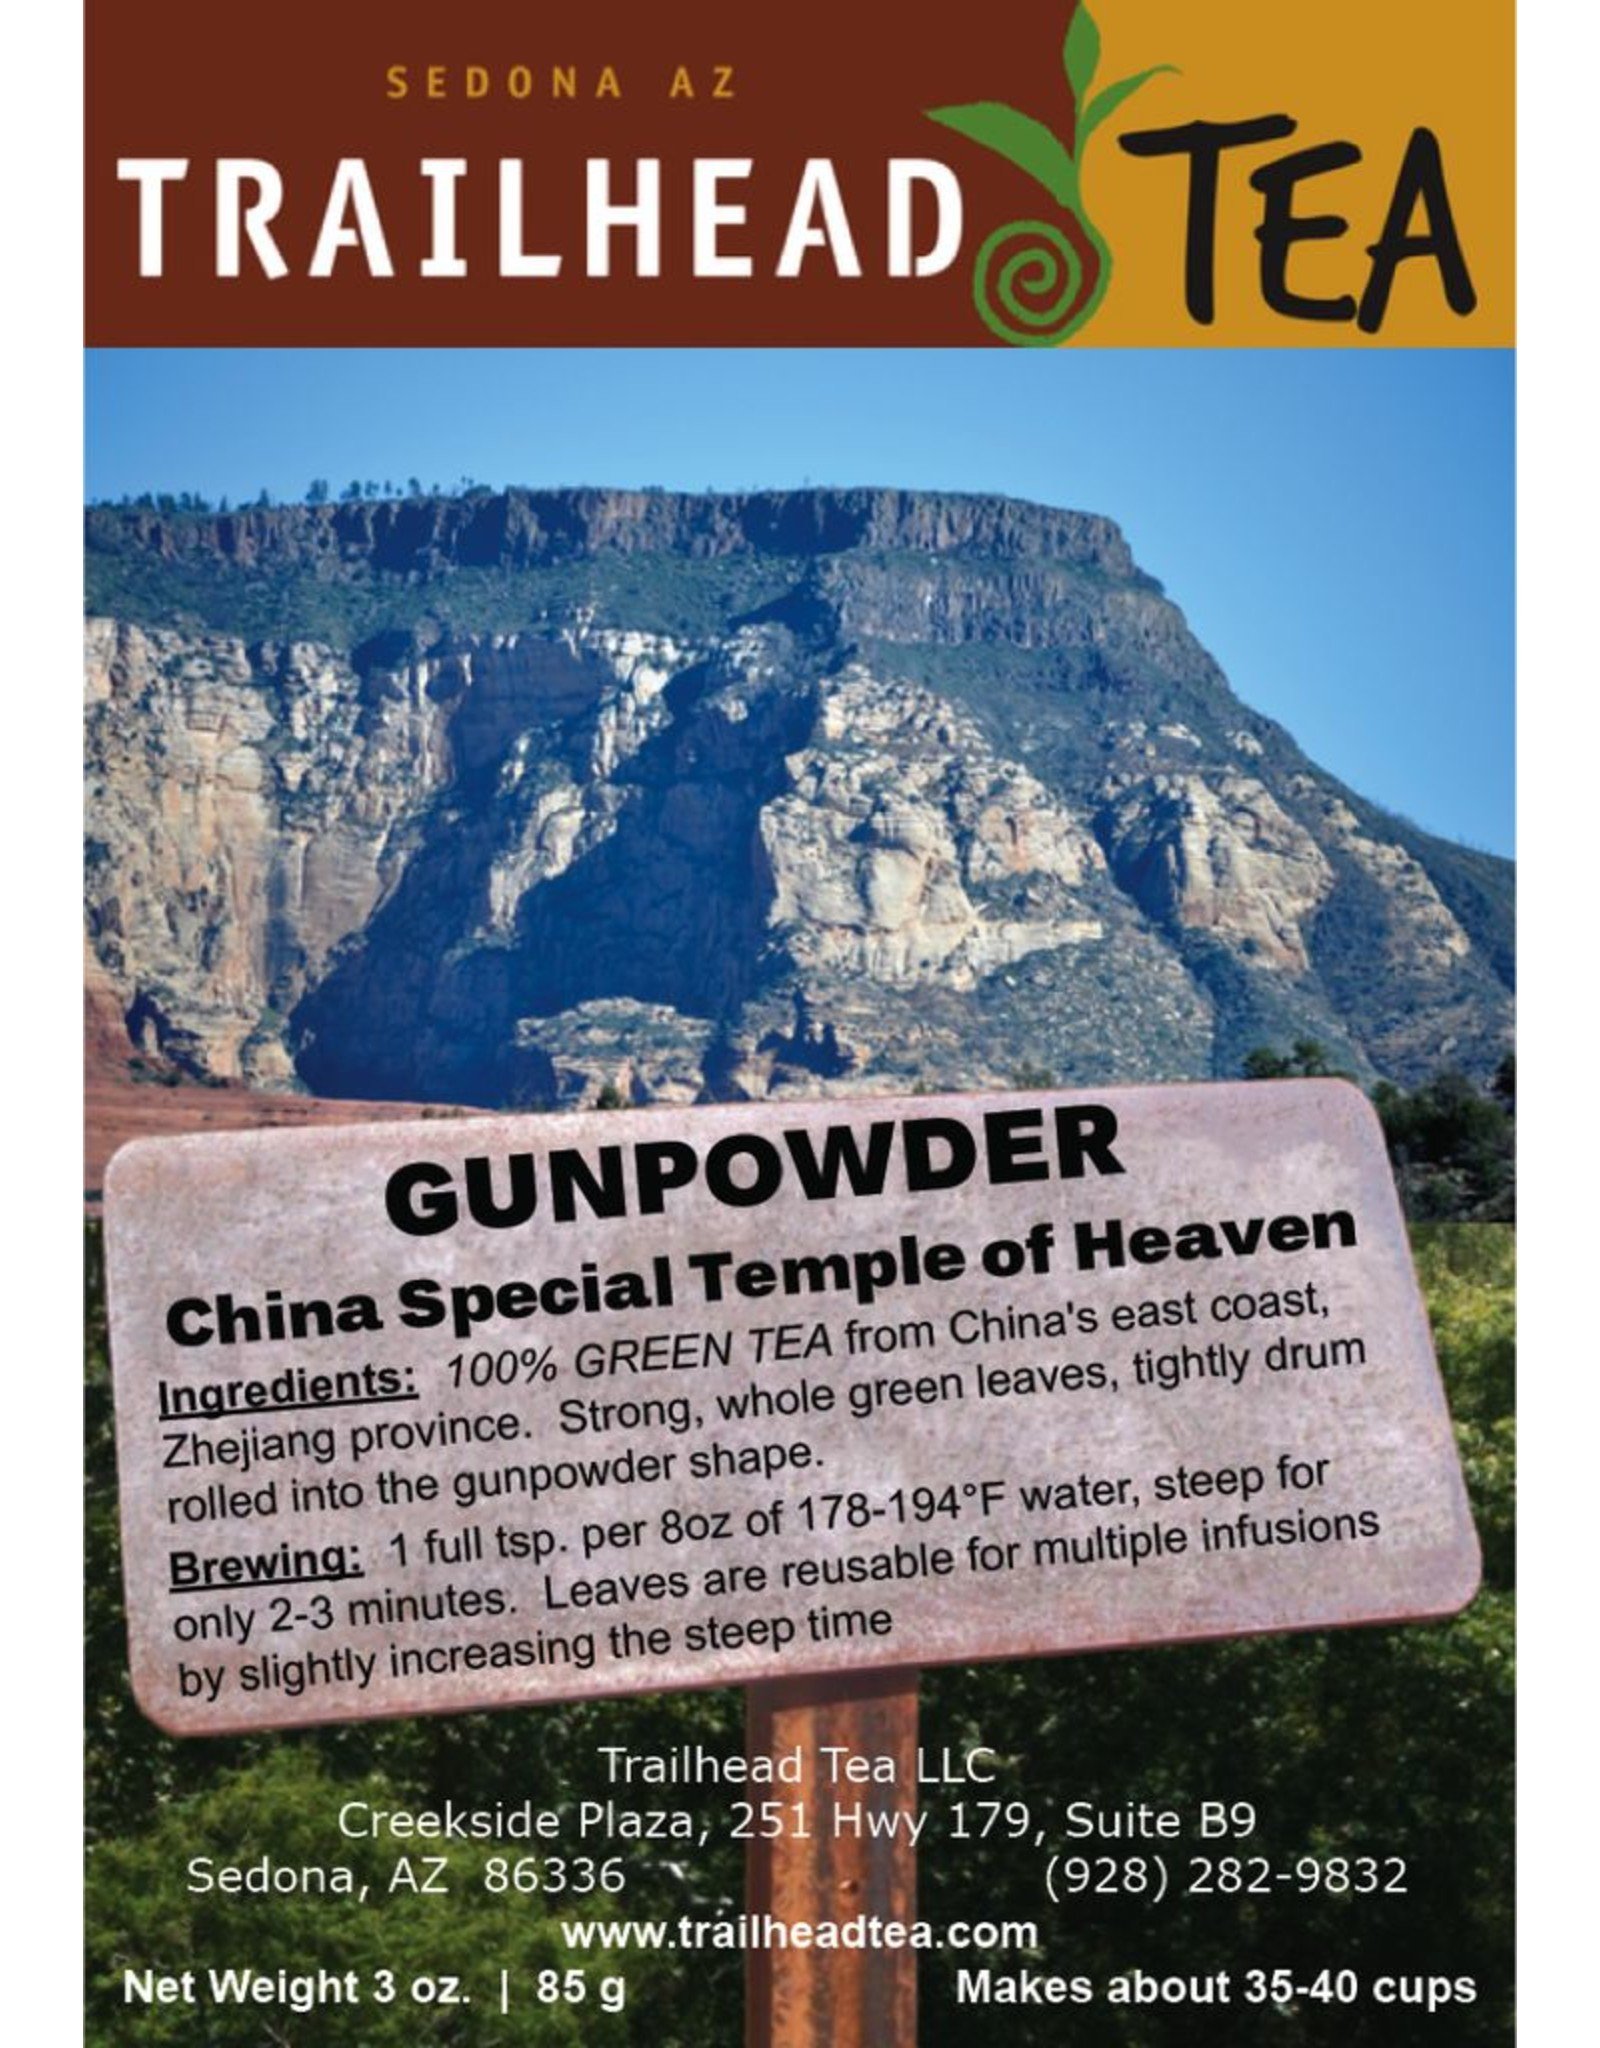 Tea from China Gunpowder Temple of Heaven